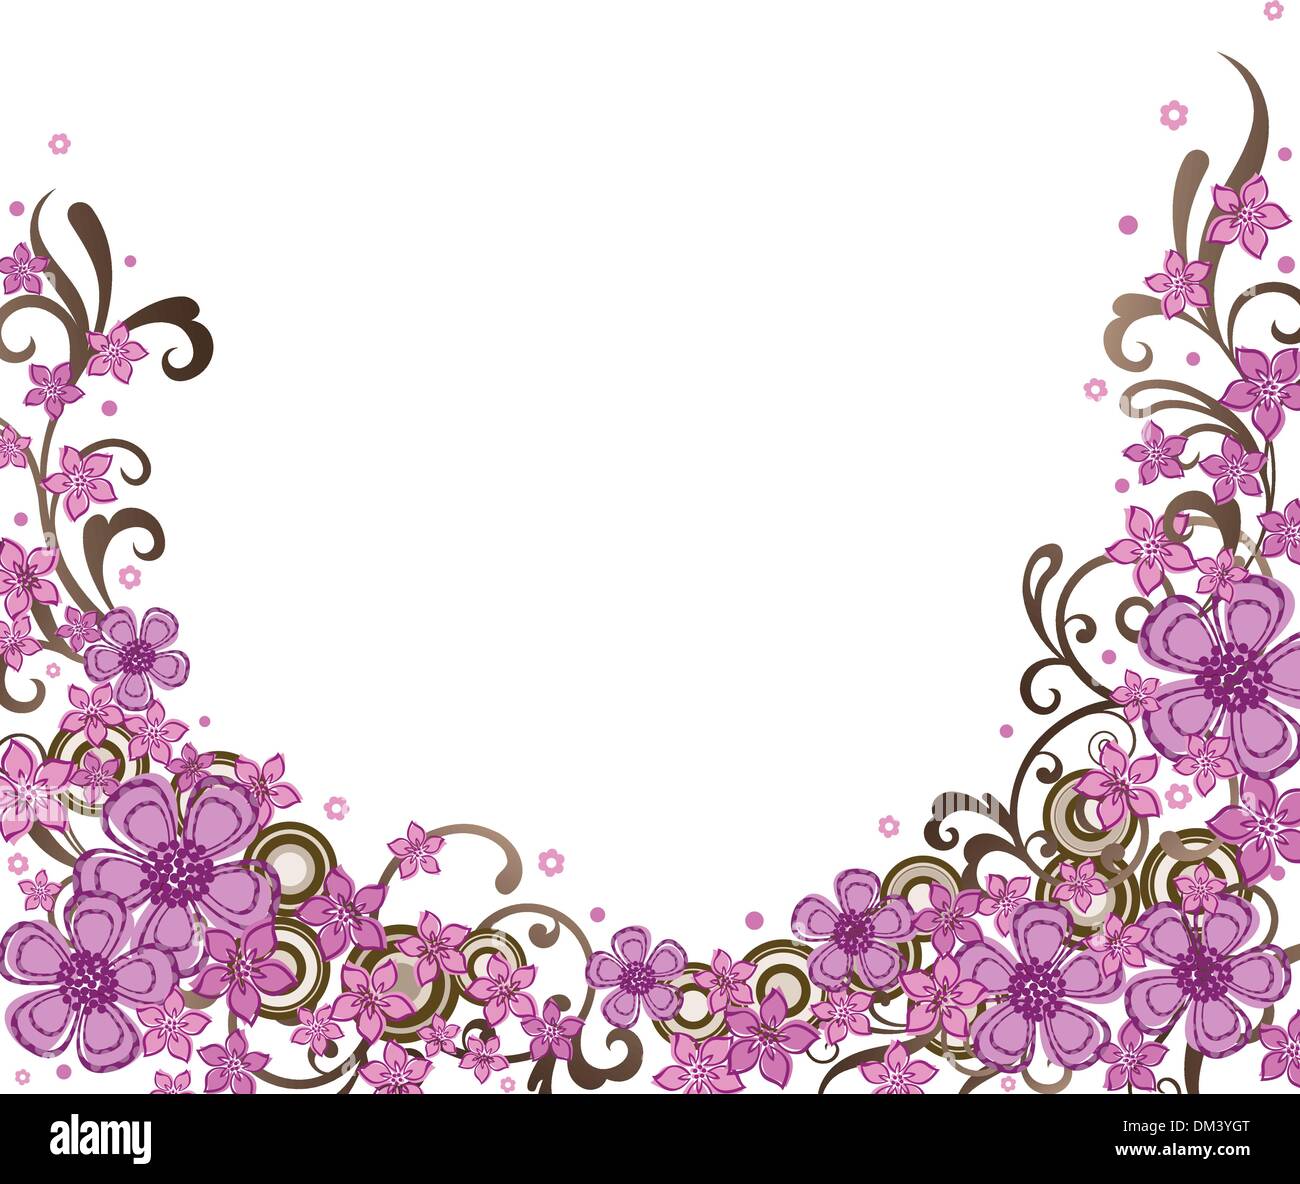 Decorative pink floral border Stock Vector